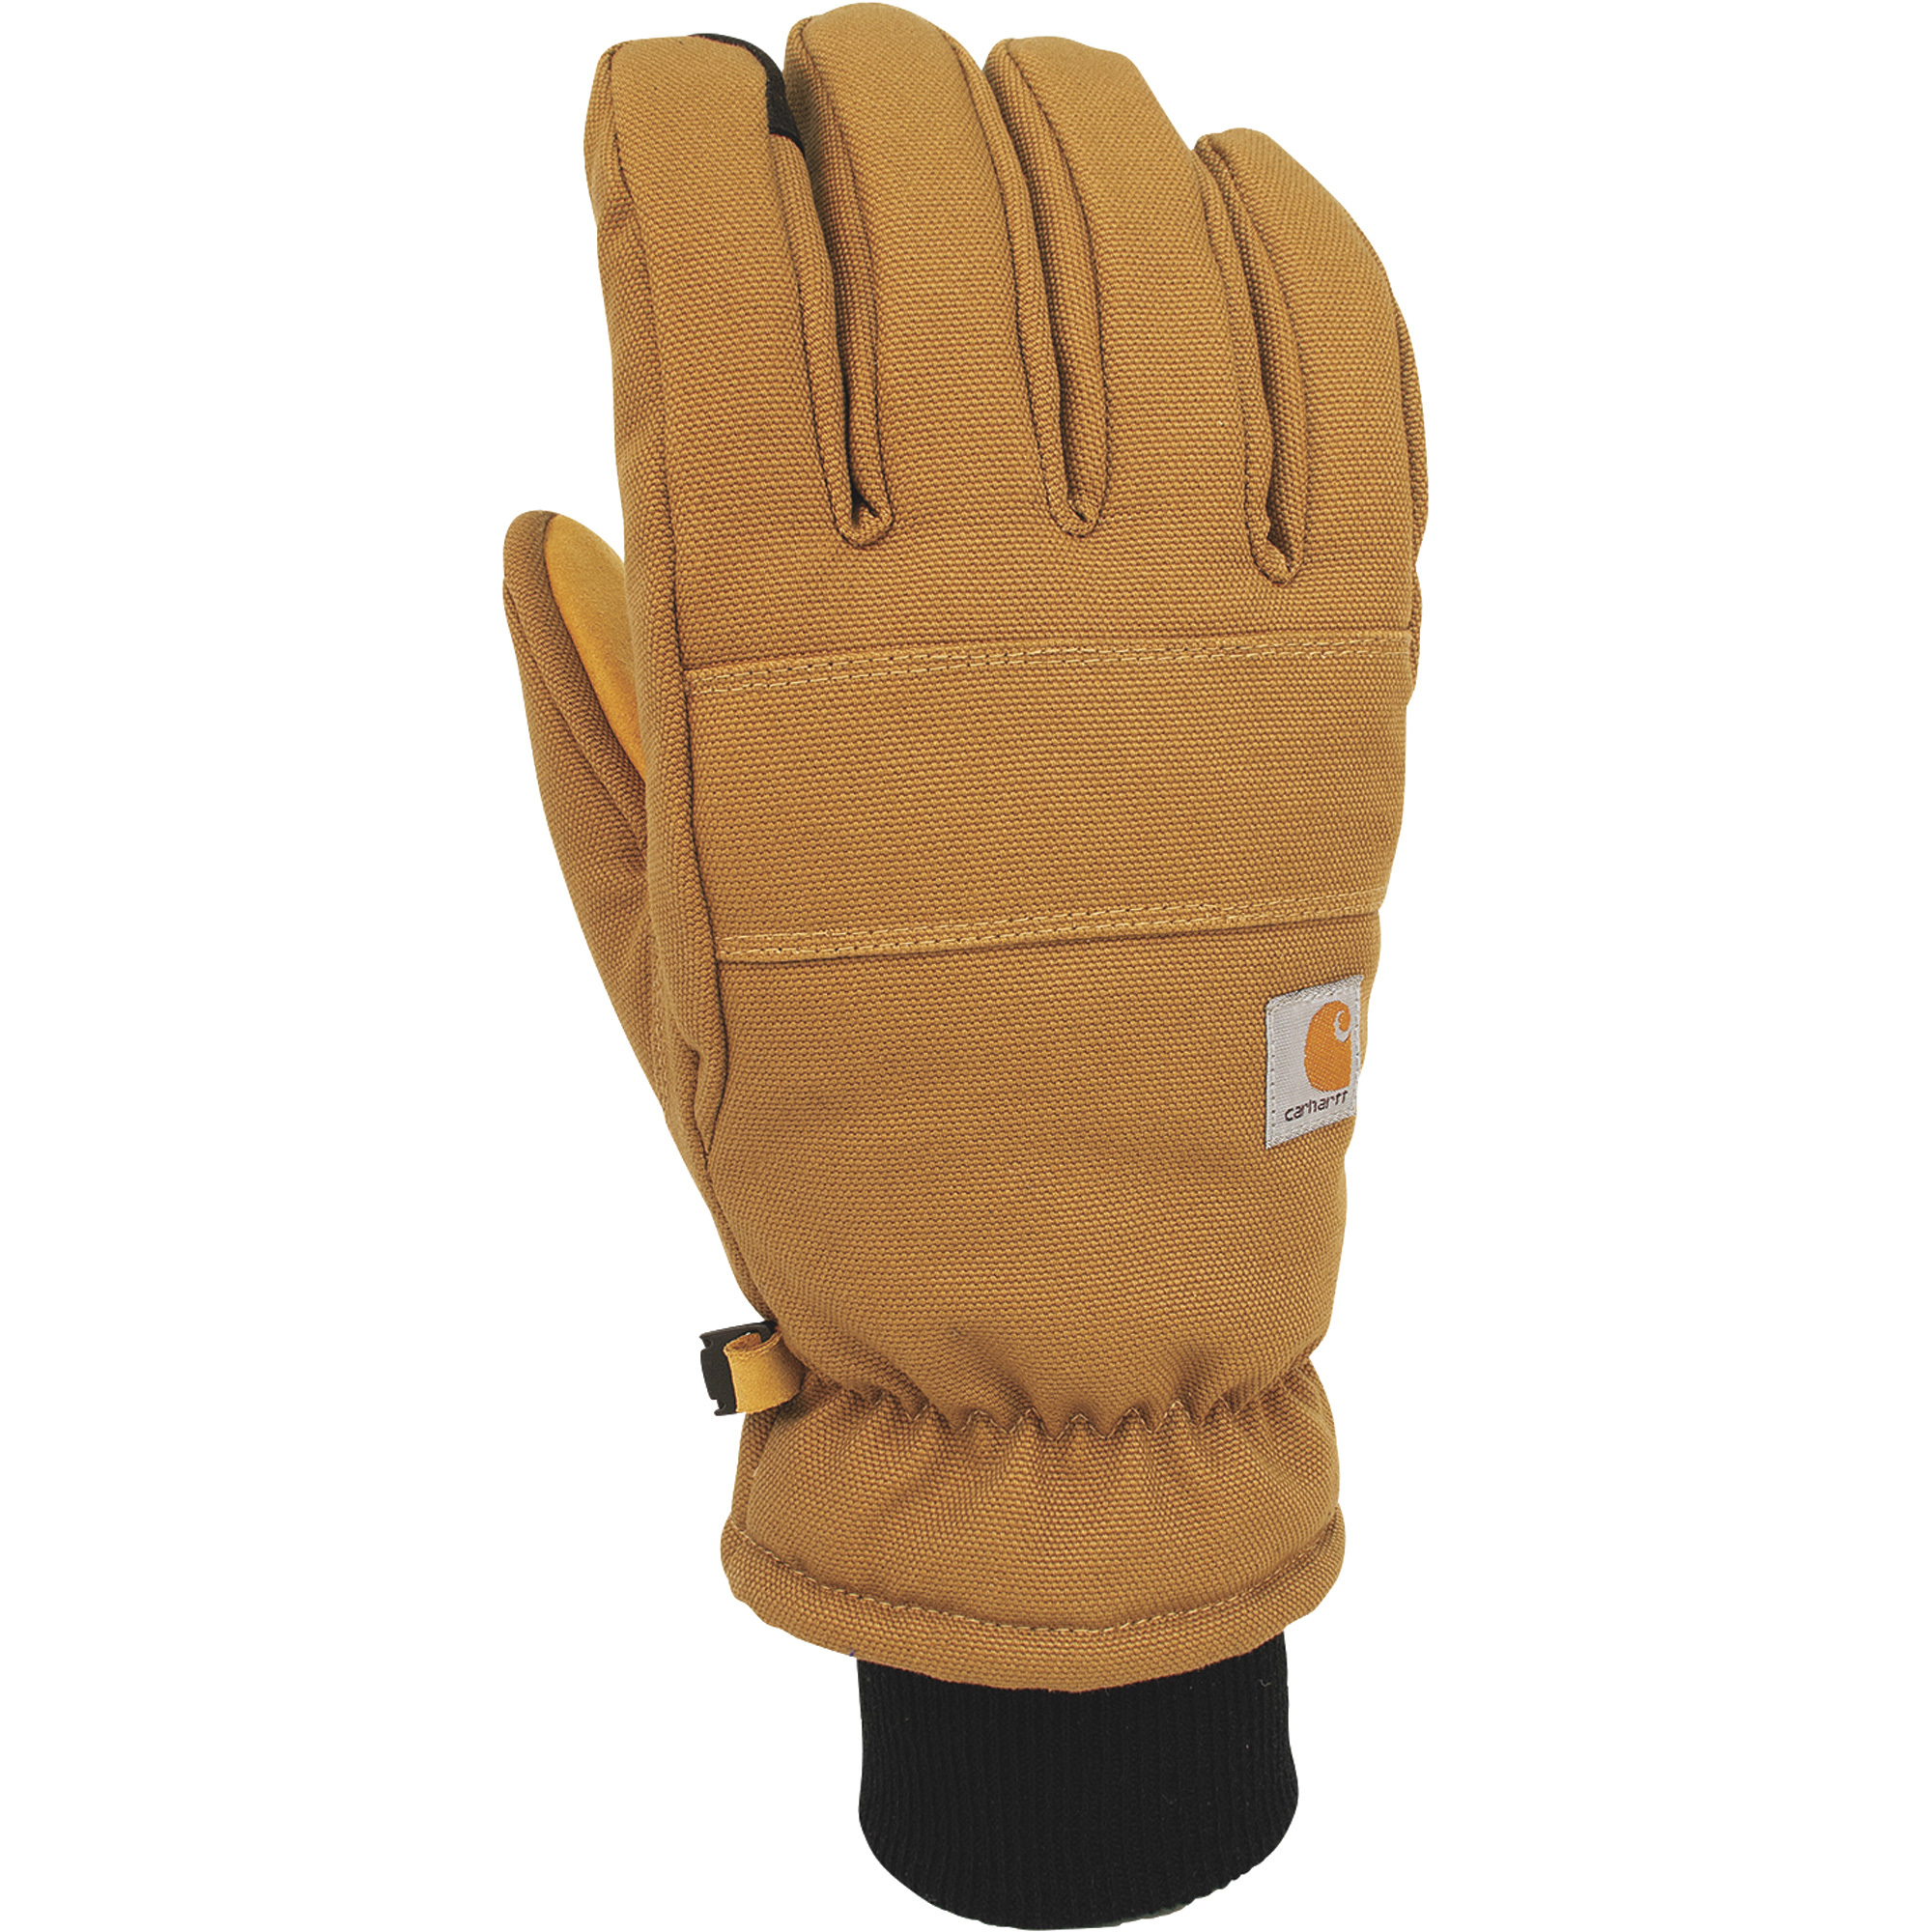 Carhartt Waterproof Insulated Duck Gloves with Knit Cuffs â 1 Pair, Black, Large, Model GL0781-M L